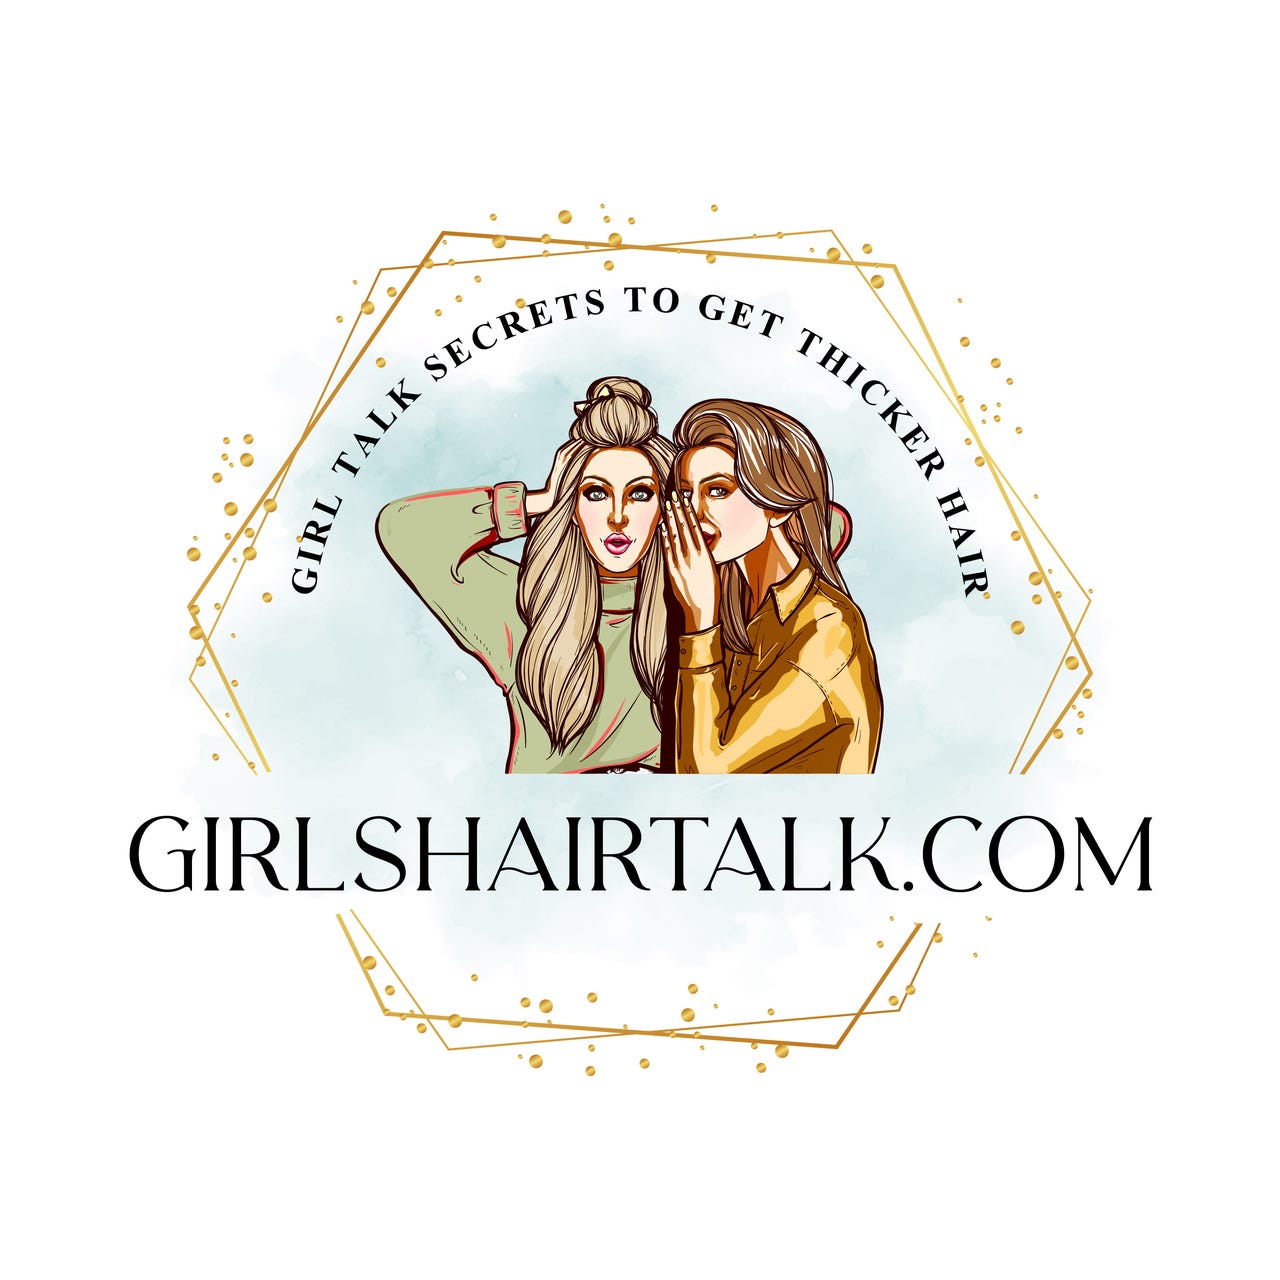 Artwork for Girls Hair Talk Magazine ~ Secrets To Get Thicker Hair!